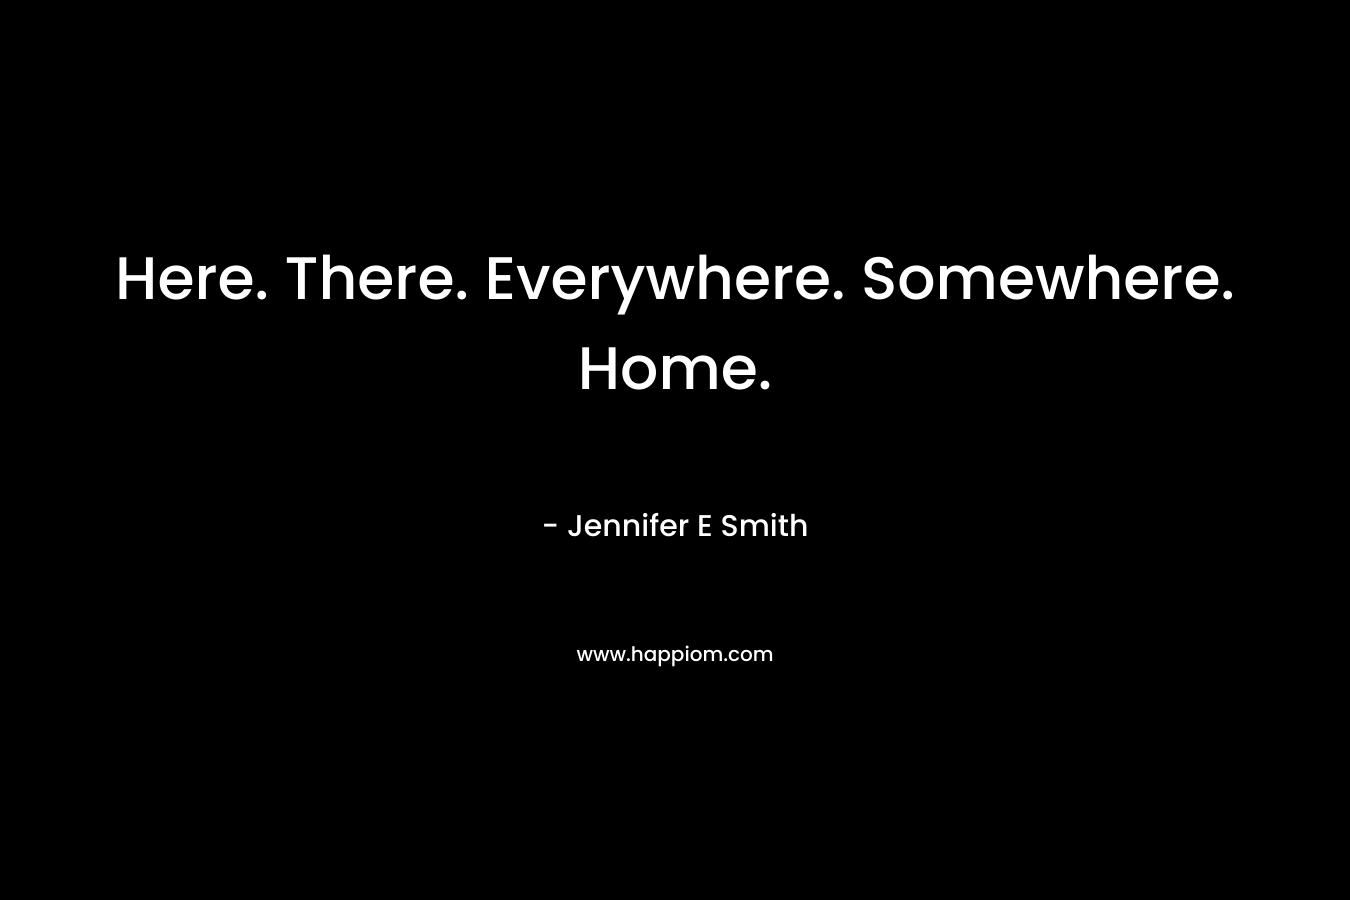 Here. There. Everywhere. Somewhere. Home.